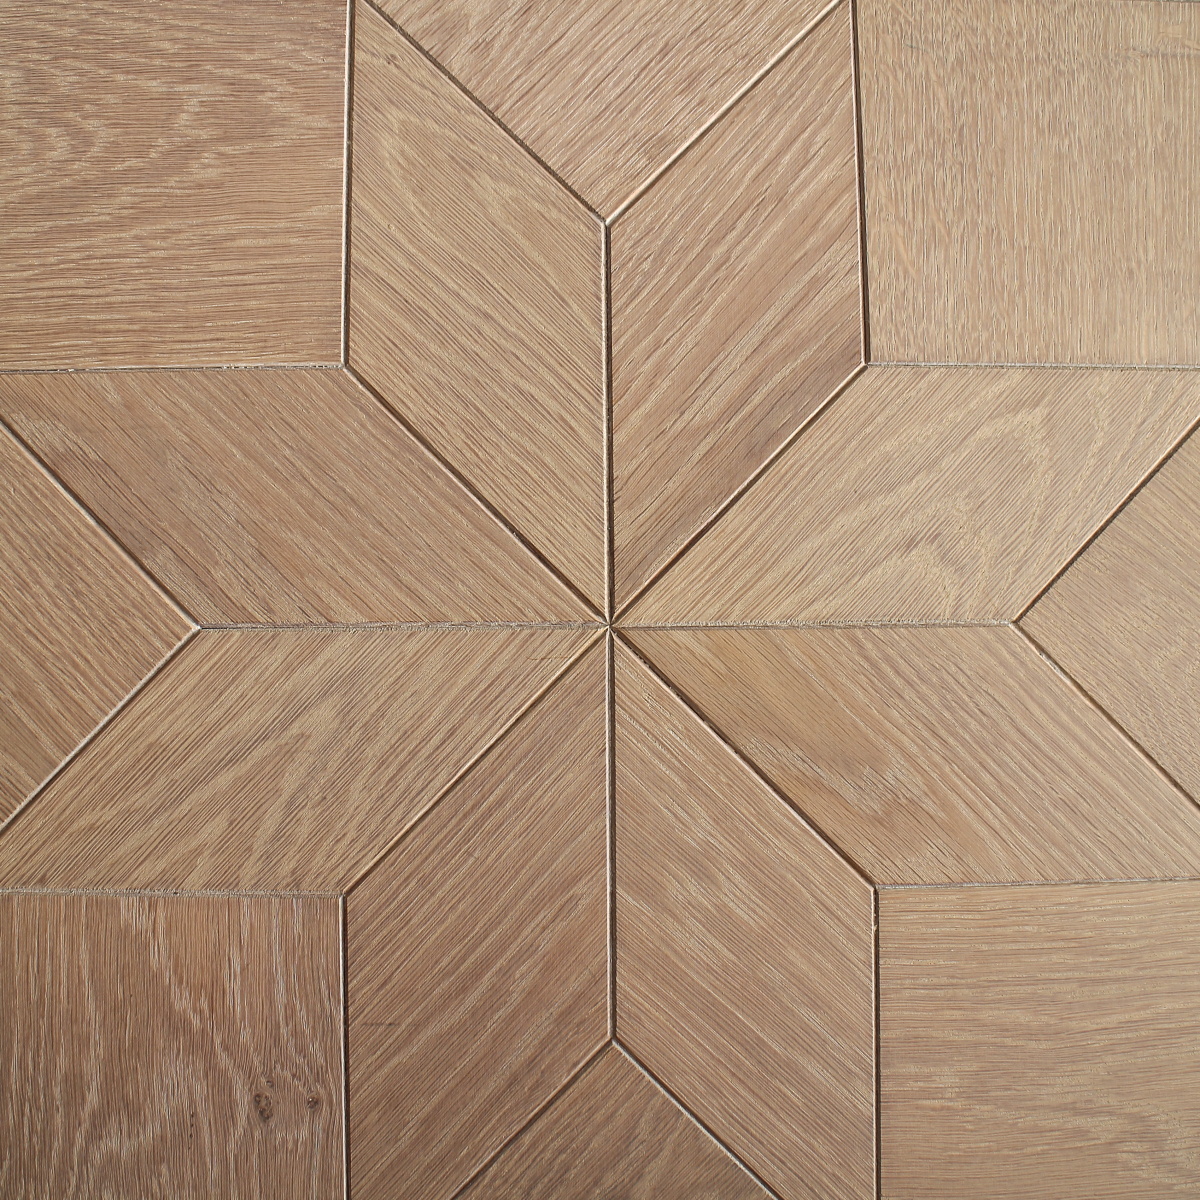 Geometric Star Pattern Pale Oak Parquet Flooring